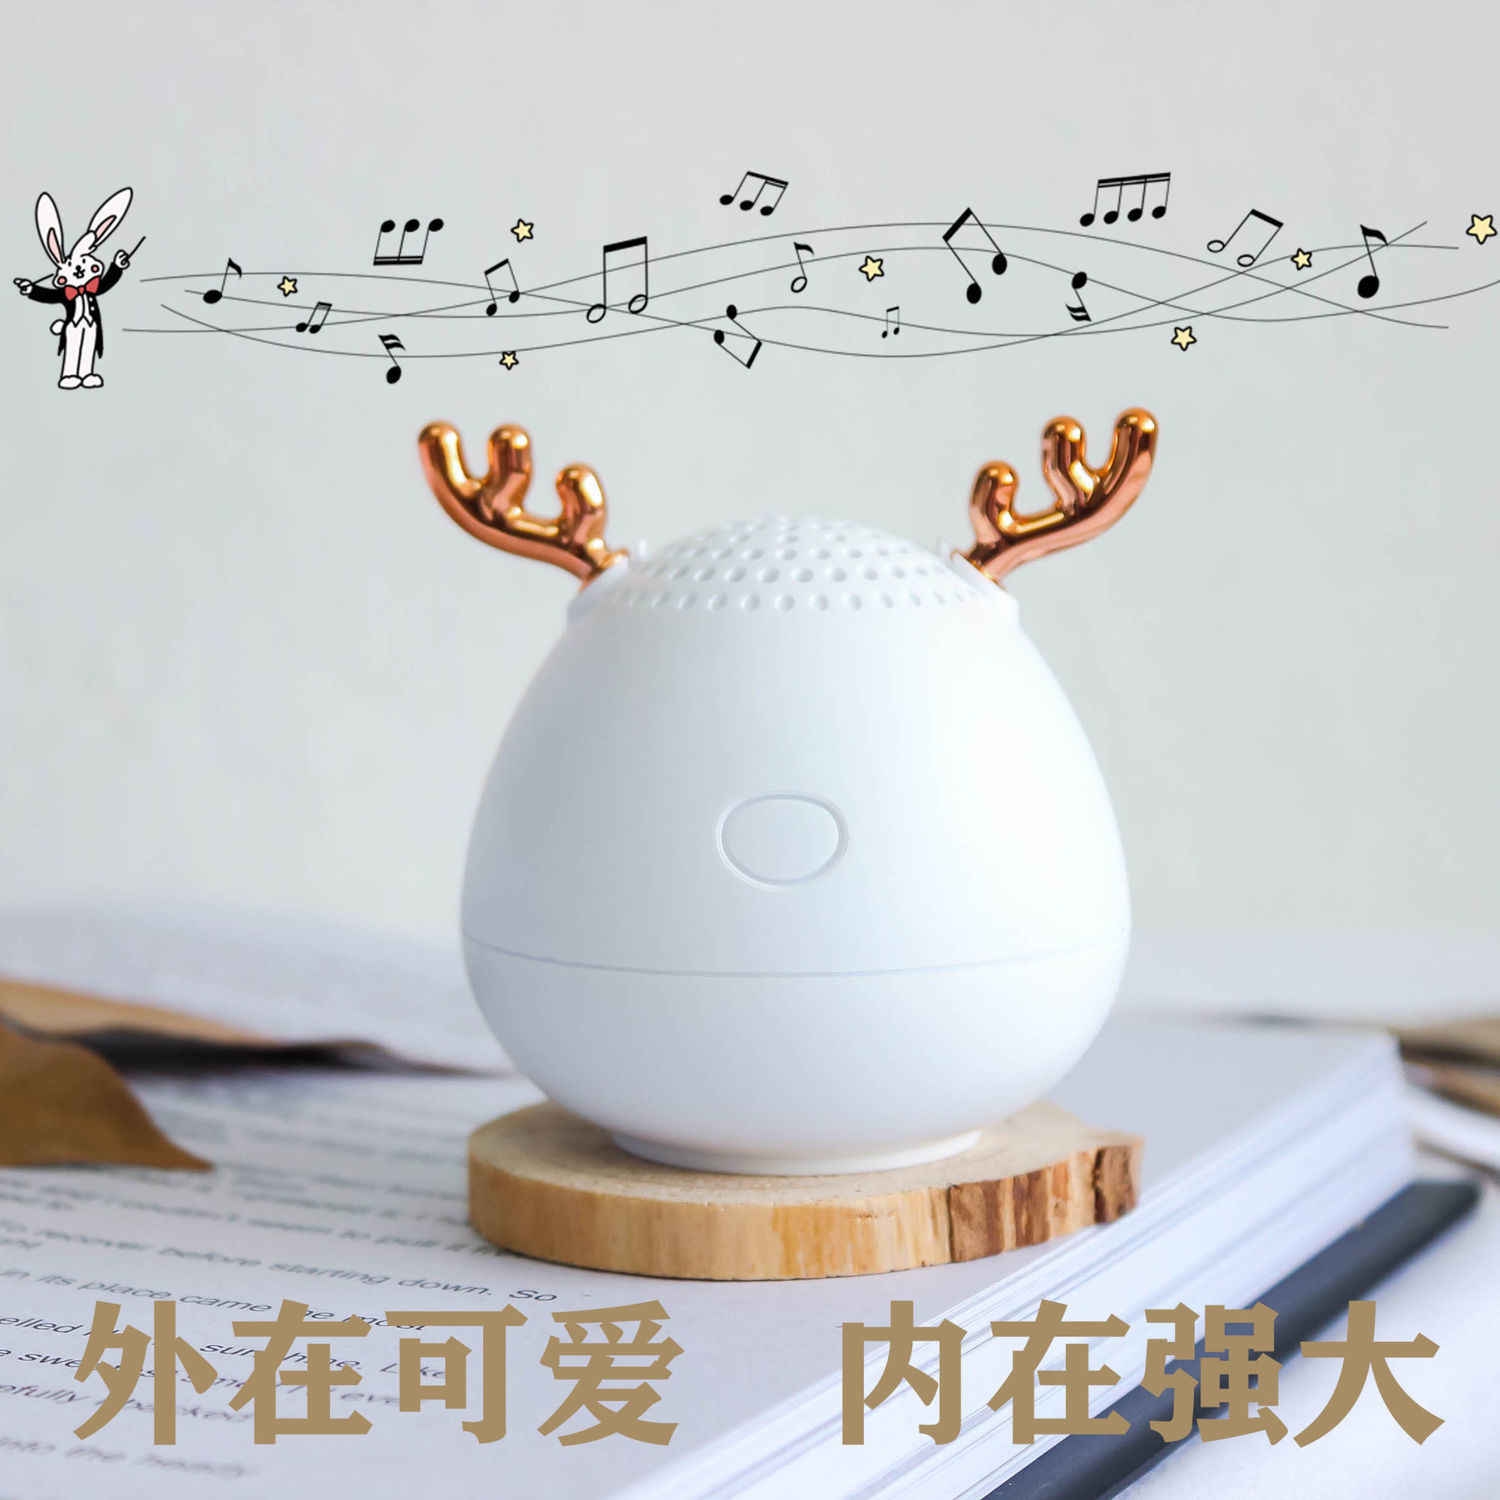 2020 new cute antler speaker wireless bluetooth mini small desktop home portable mobile phone bluetooth speaker